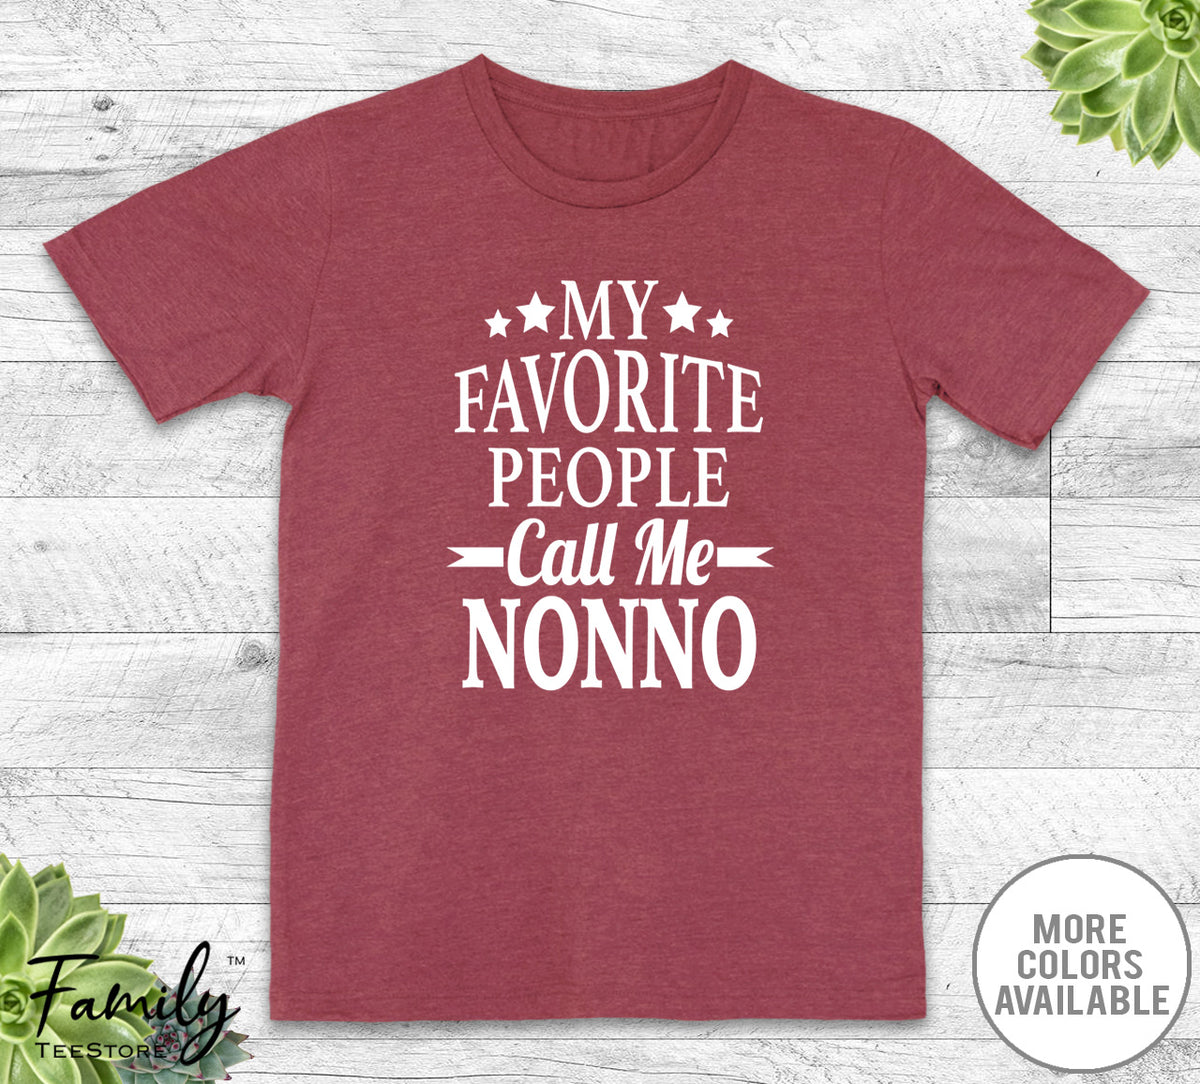 My Favorite People Call Me Nonno - Unisex T-shirt - Nonno Shirt - Nonno Gift